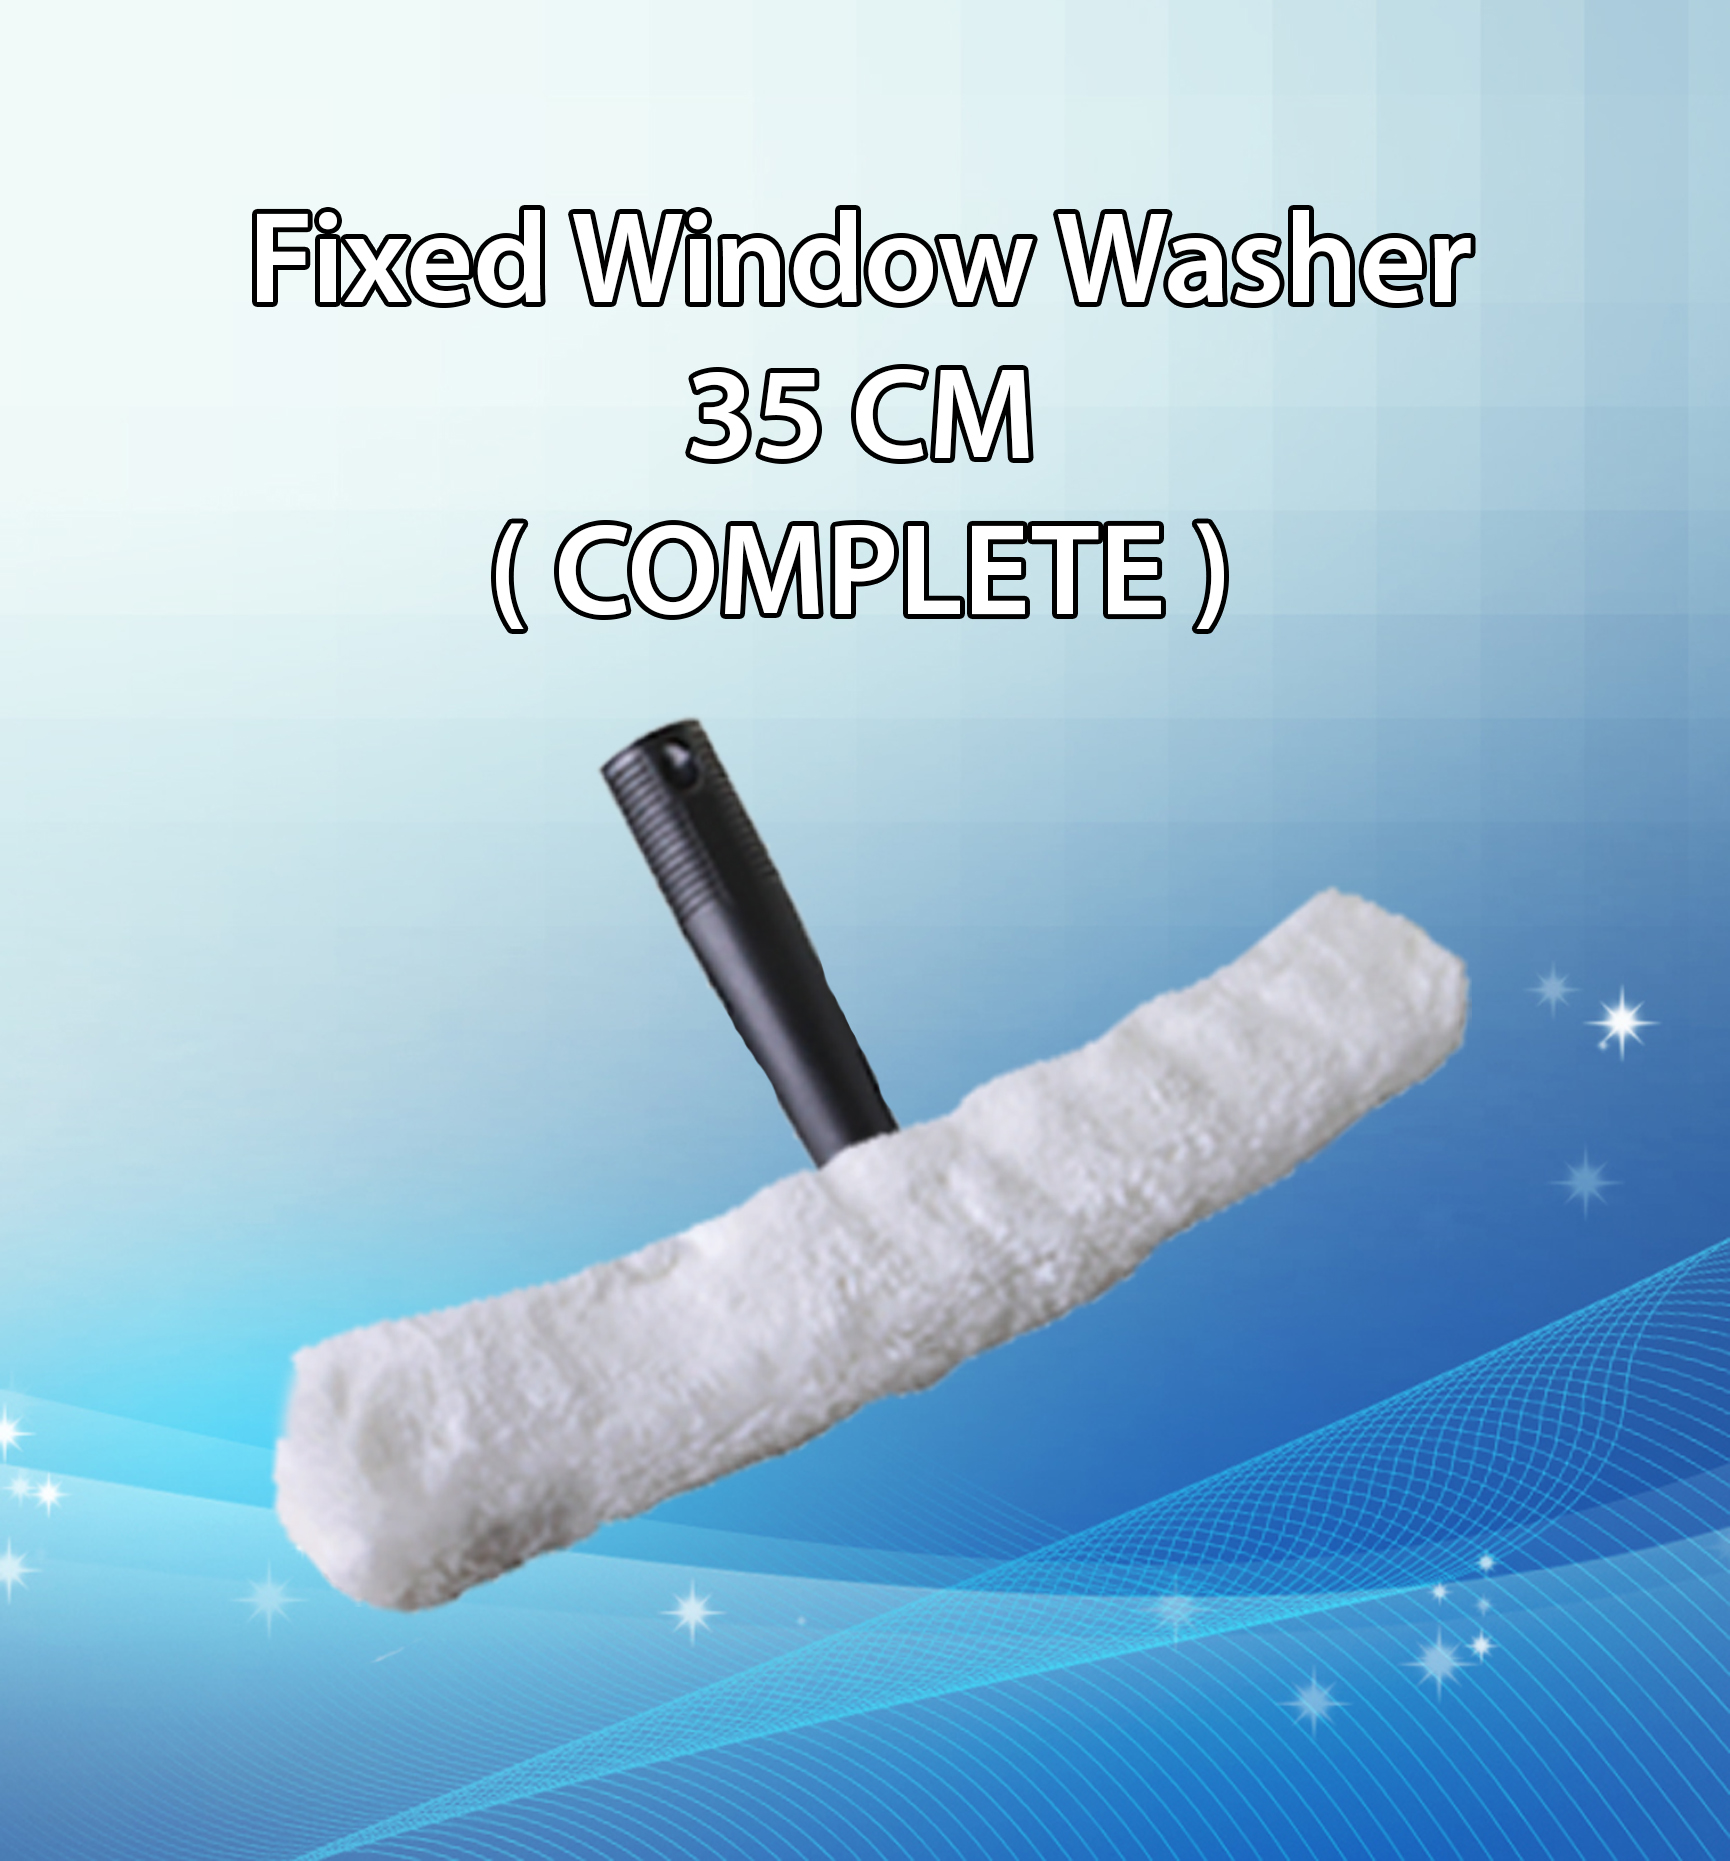 Fixed-Window-Washer-Complete_35-CM.jpg